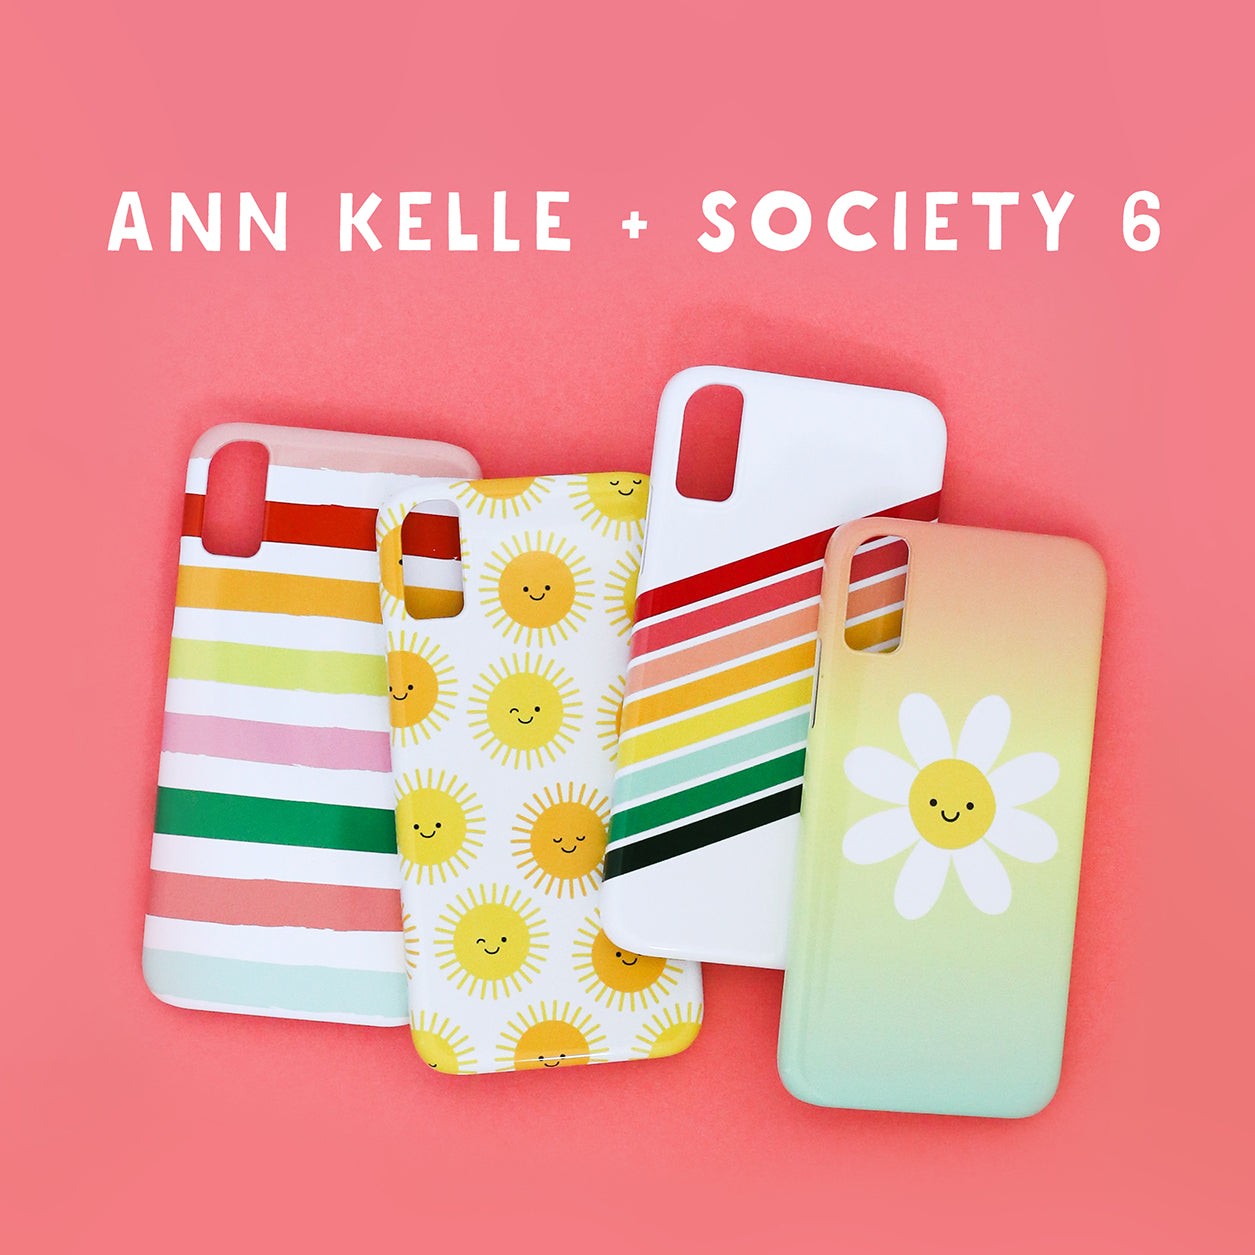 Society 6 Phone Cases